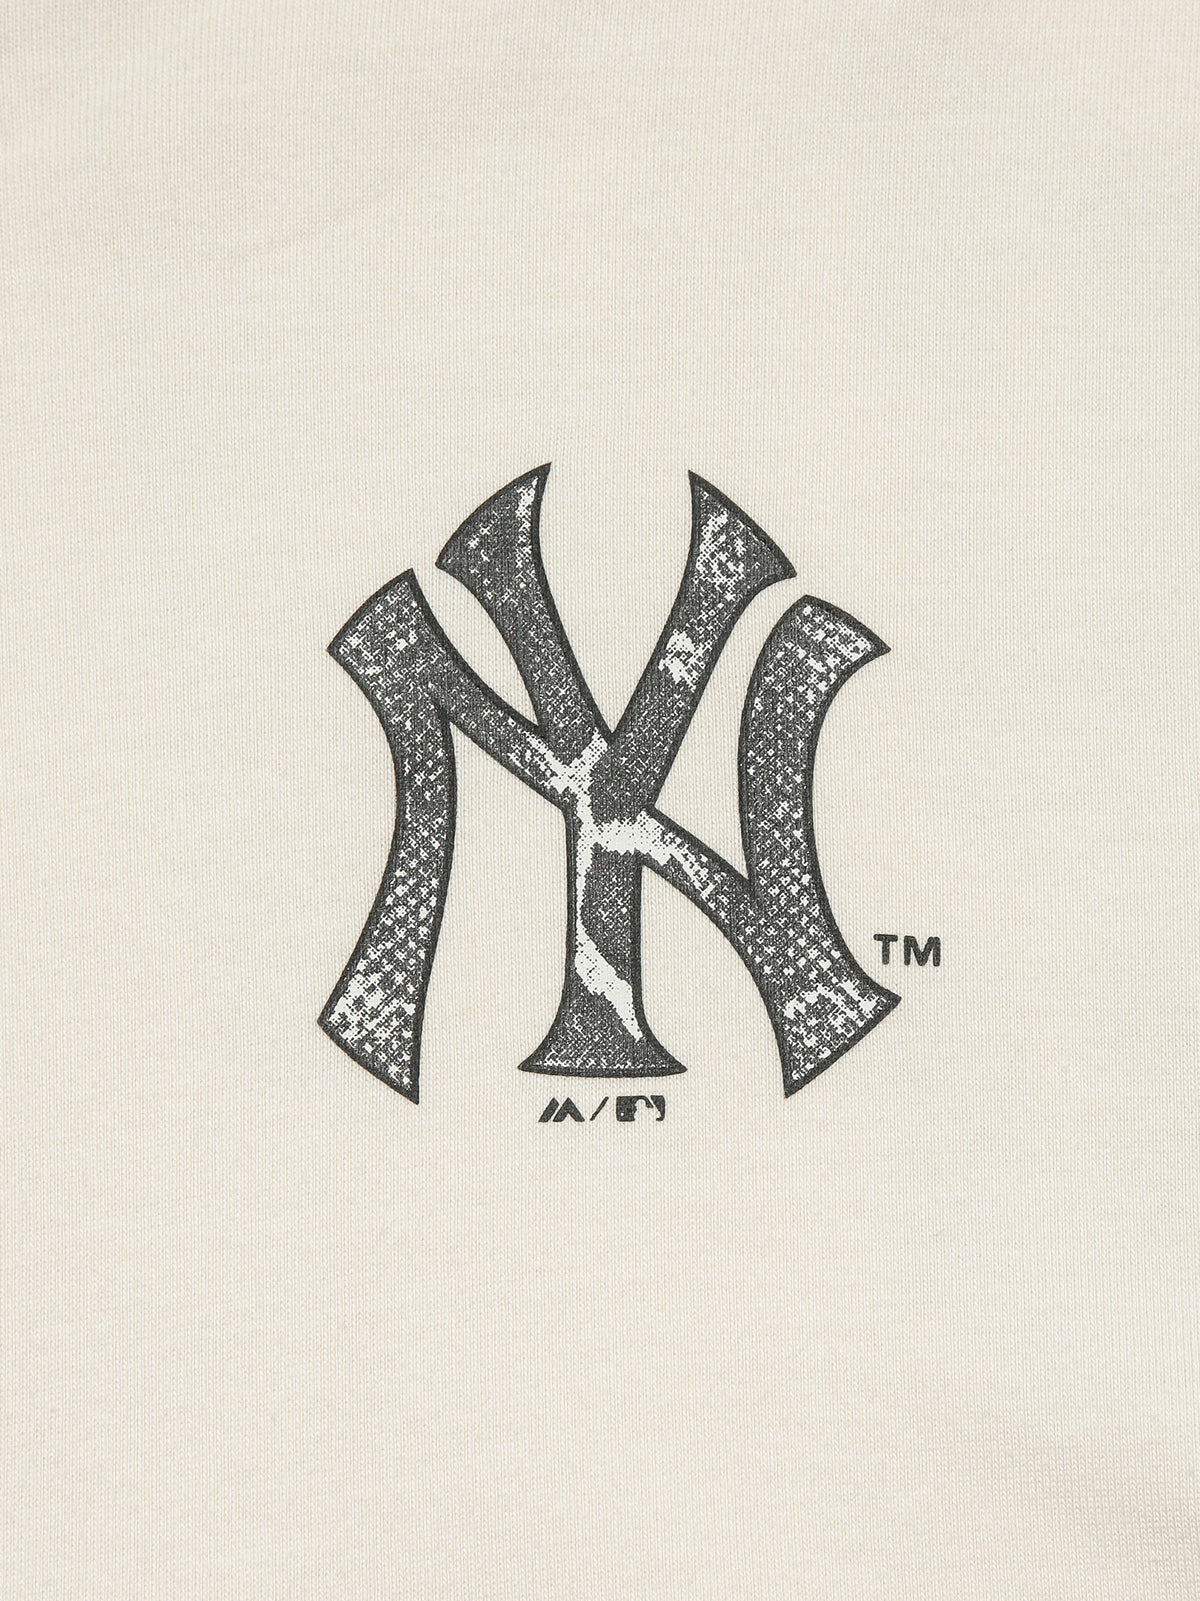 NY Yankees Long Sleeve Animal T-Shirt in White Sand